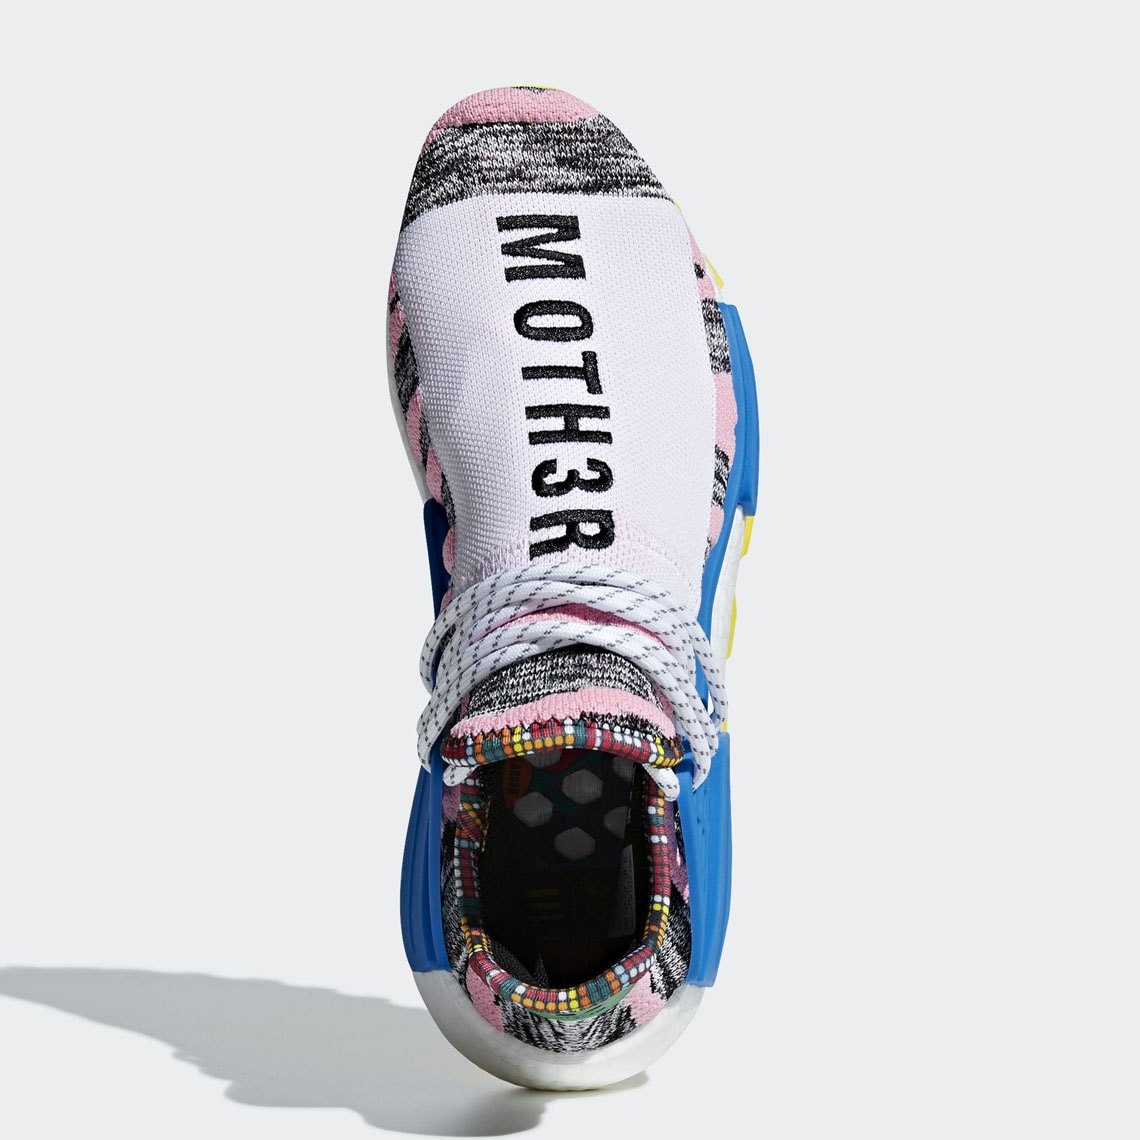 Pharrell x adidas Originals 聯乘 Hu NMD 全新「MOTH3R」配色官方圖片釋出